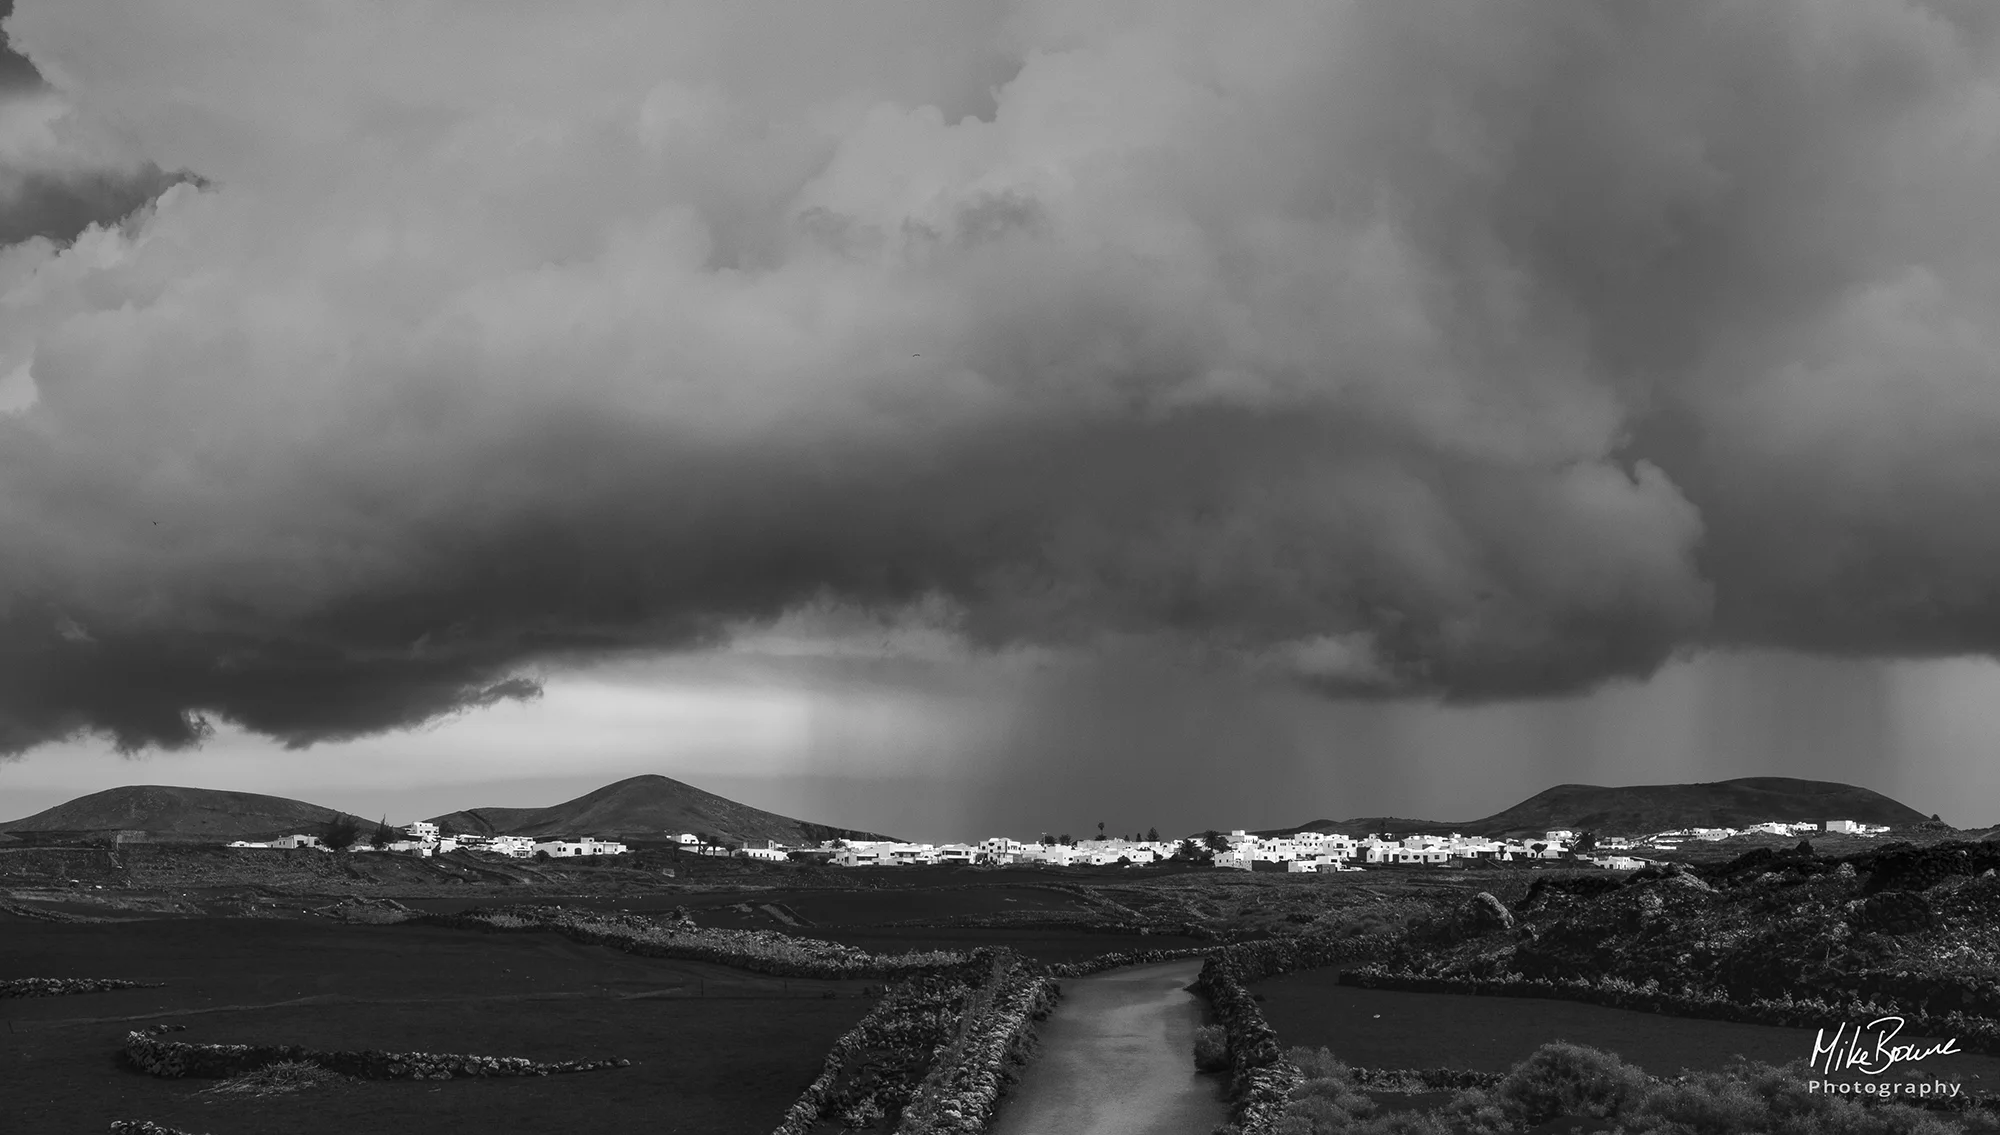 Rain storm above village of Mancha Blanca on Spanish island of Lanzarote